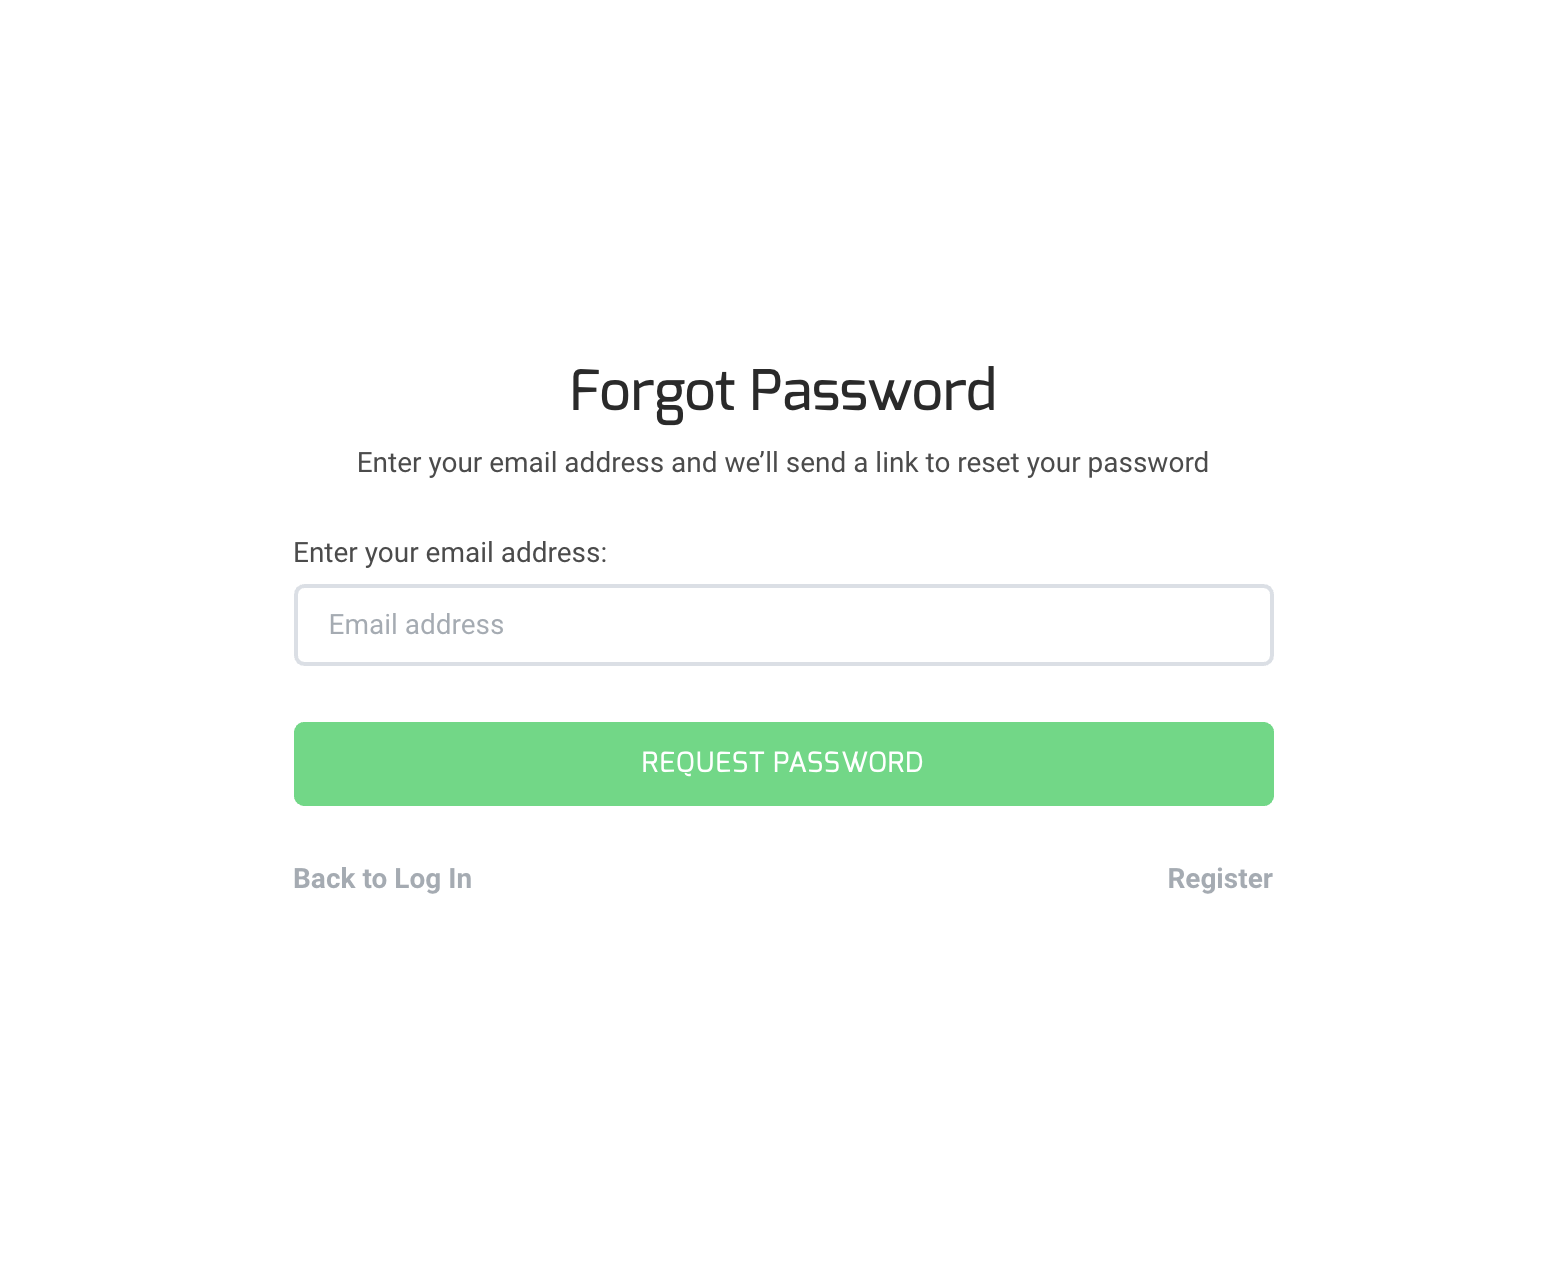 nebular-authentification-request-password